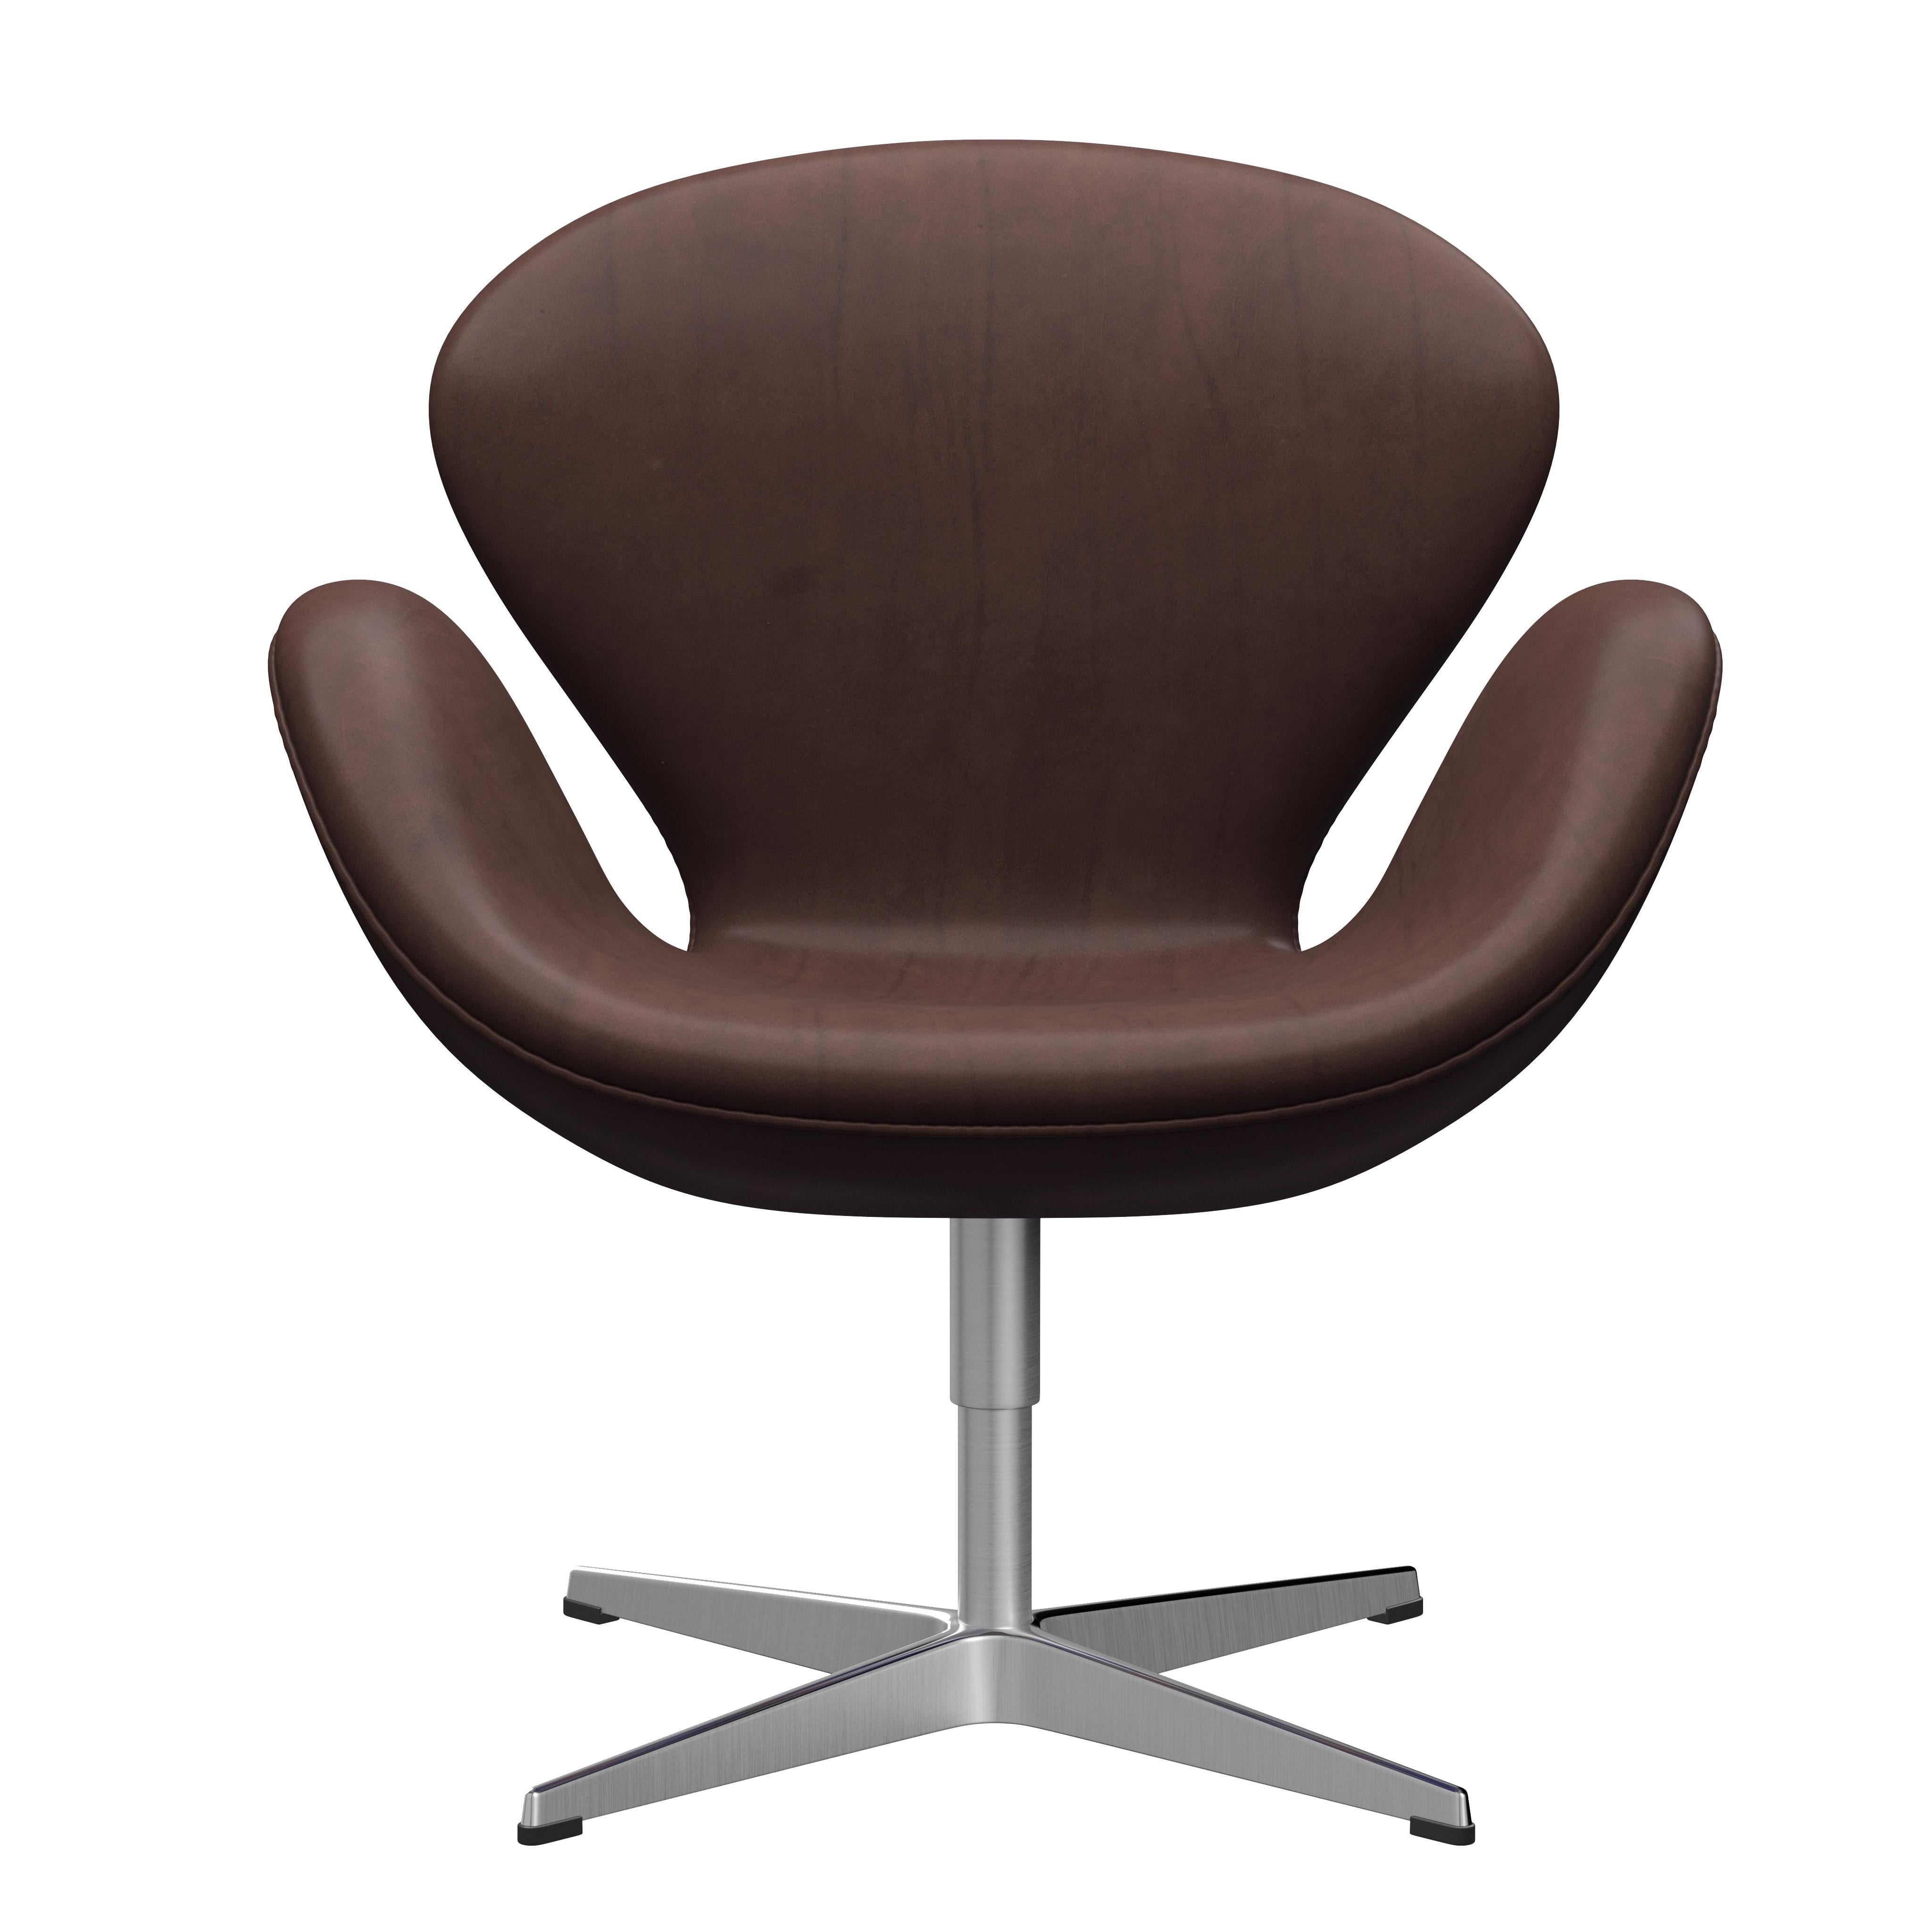 Arne Jacobsen 'Swan' Chair for Fritz Hansen in Leather Upholstery (Cat. 5) For Sale 7